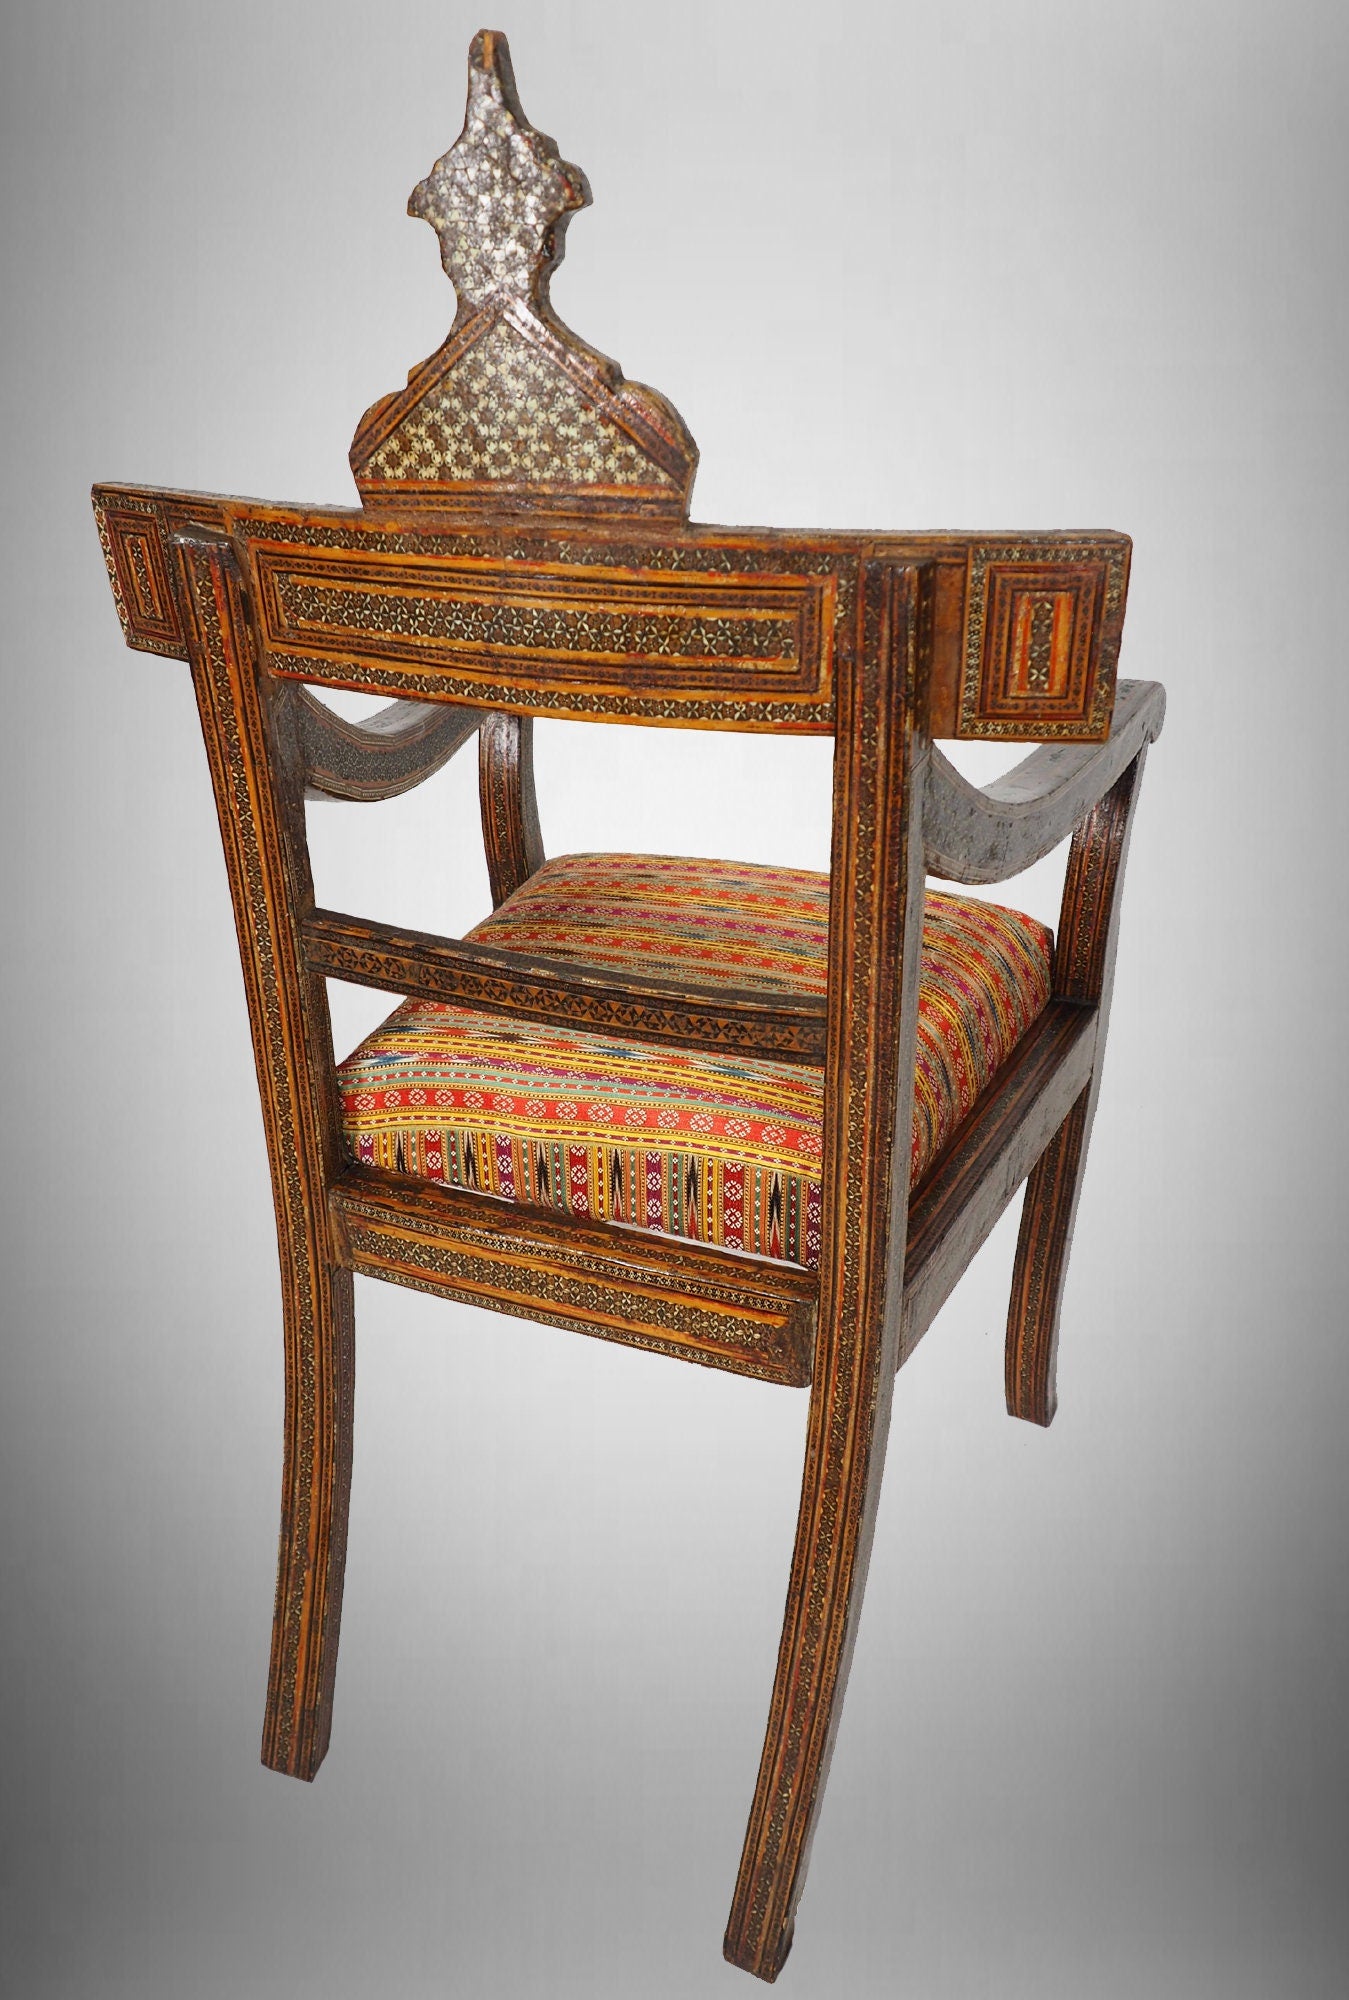 antik orientalische islamische  Stuhl Khatamkari sofa handbemalte  miniaturmalerei armlehnstuhl mit Arabische schrift  No:B  Orientsbazar   